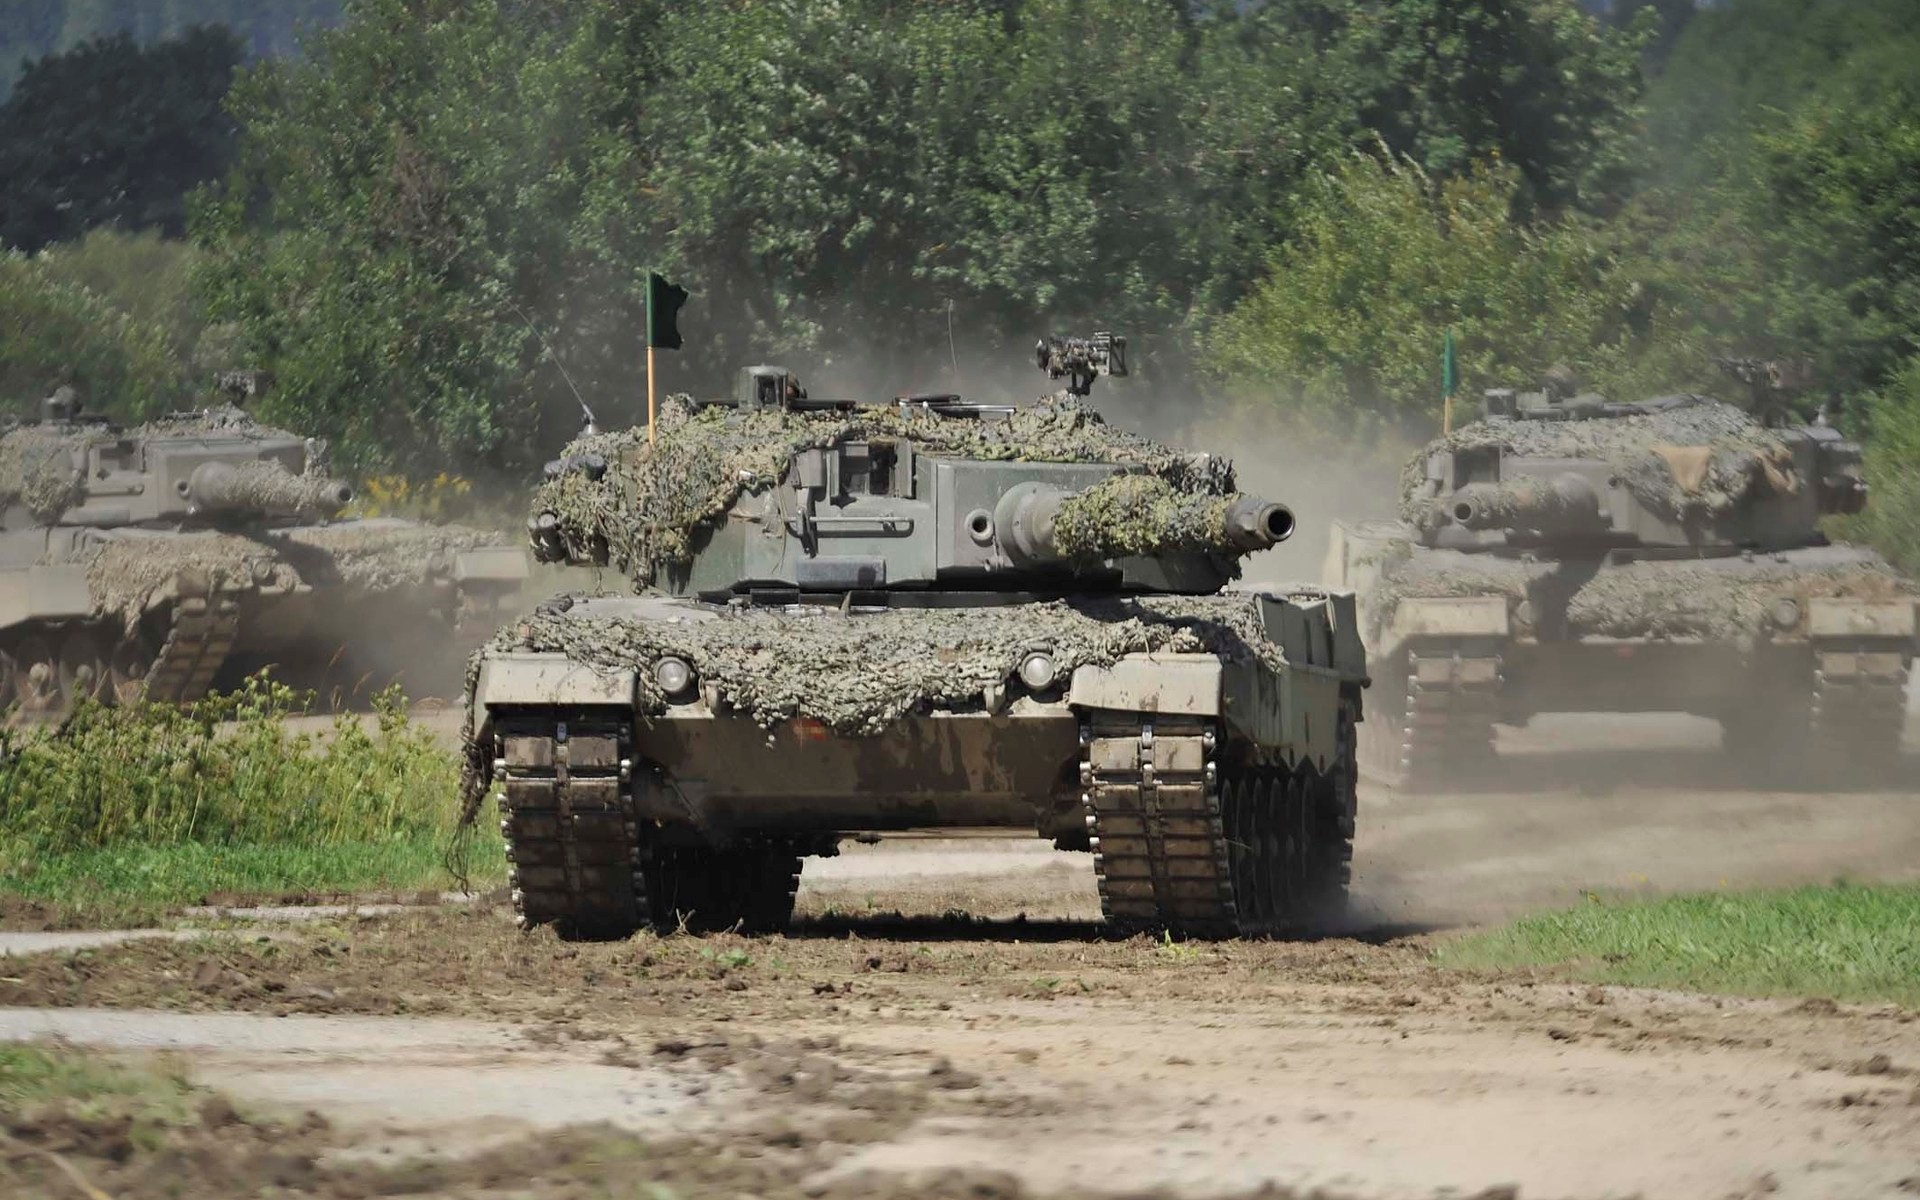 Dangerous Army Tank on War